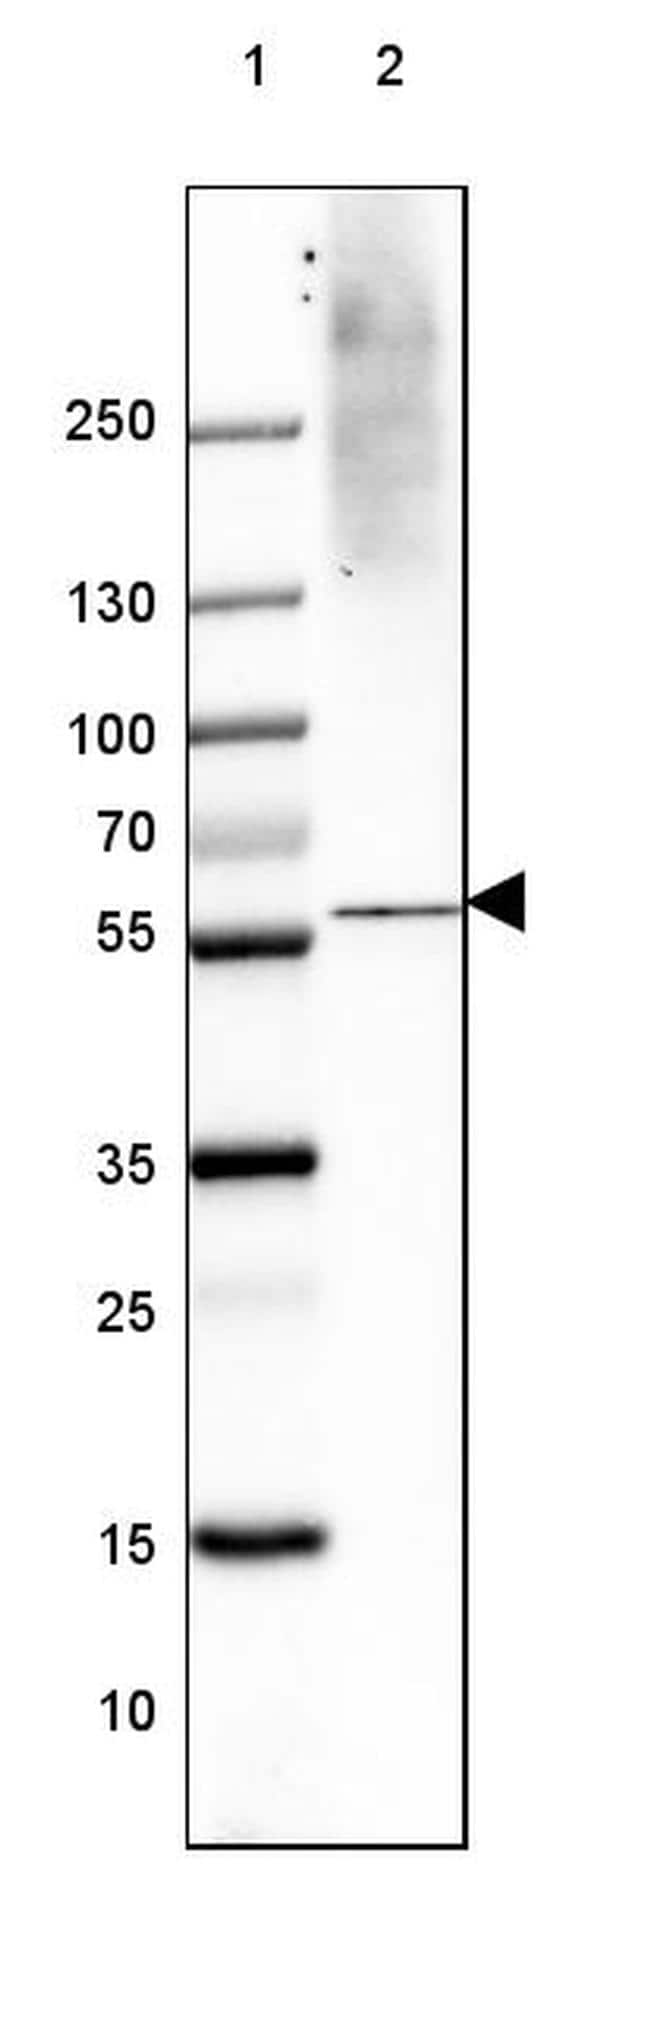 VGLUT1 Antibody in Western Blot (WB)